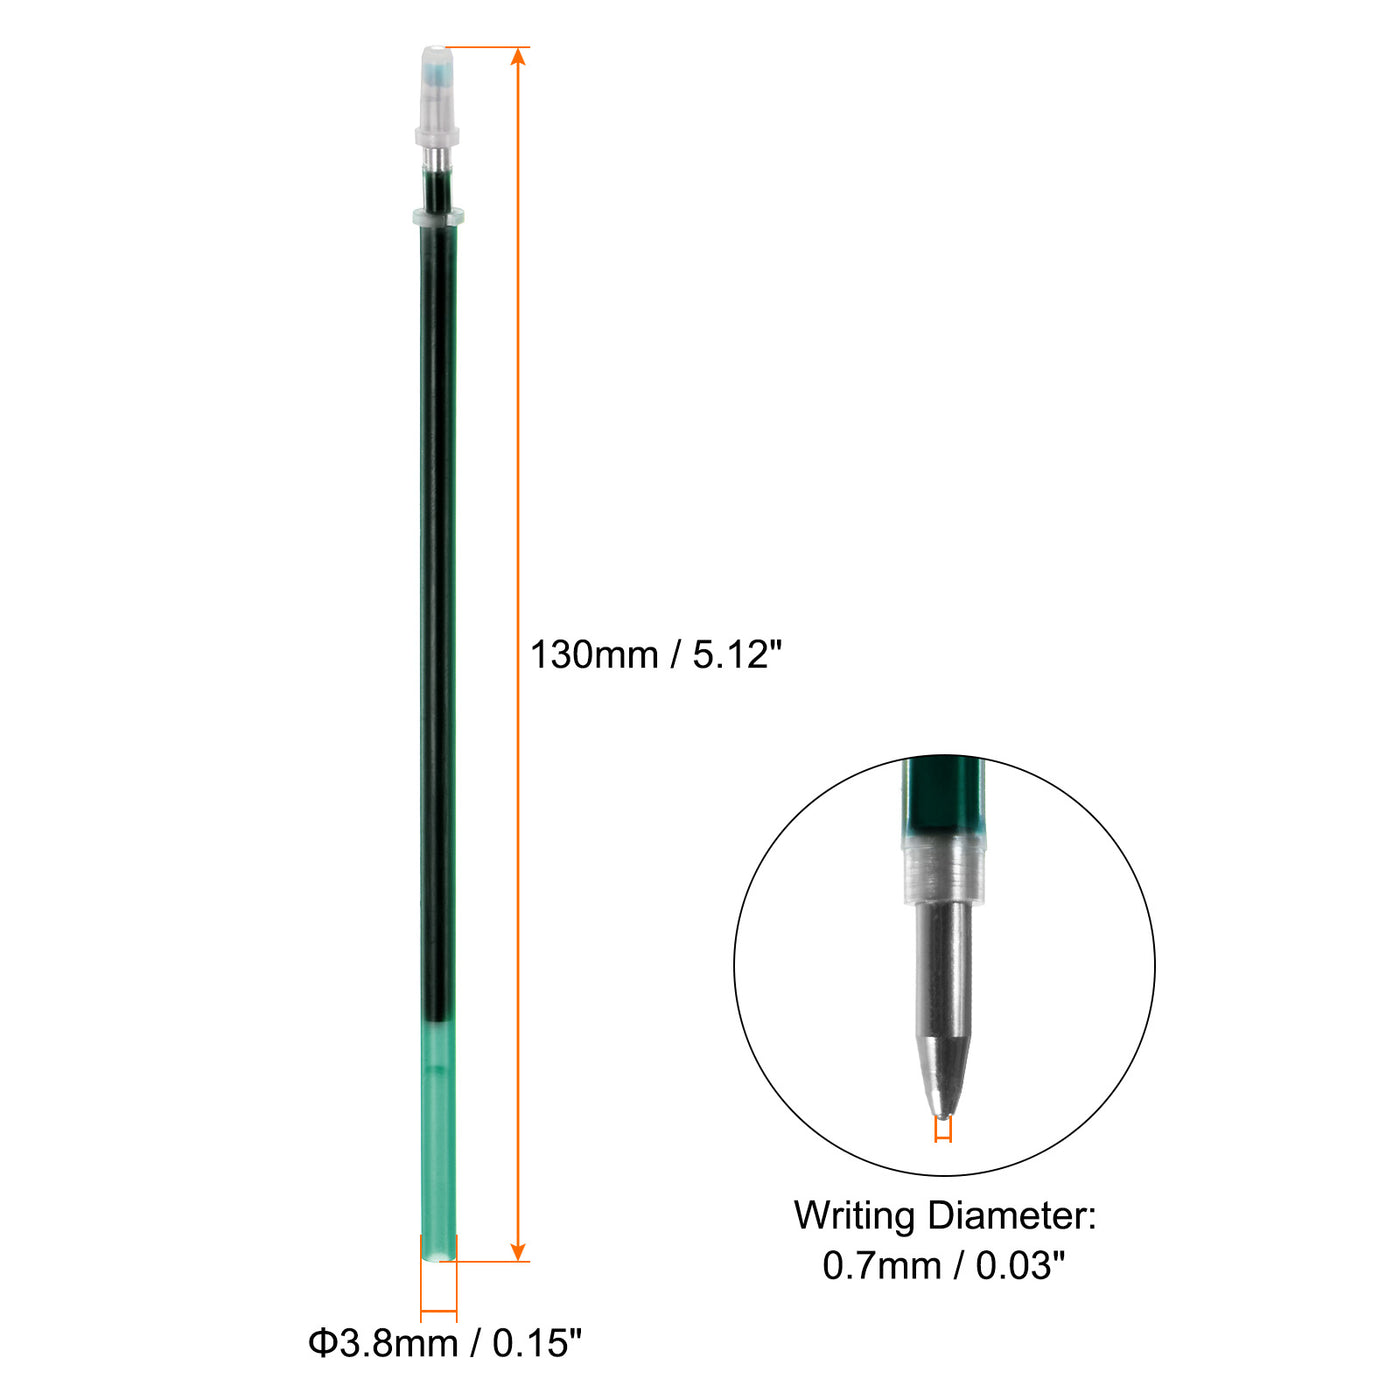 Harfington Disappearing Ink Pen Refills 100pcs 0.7mm Fabric Marker Pen Refill, Green